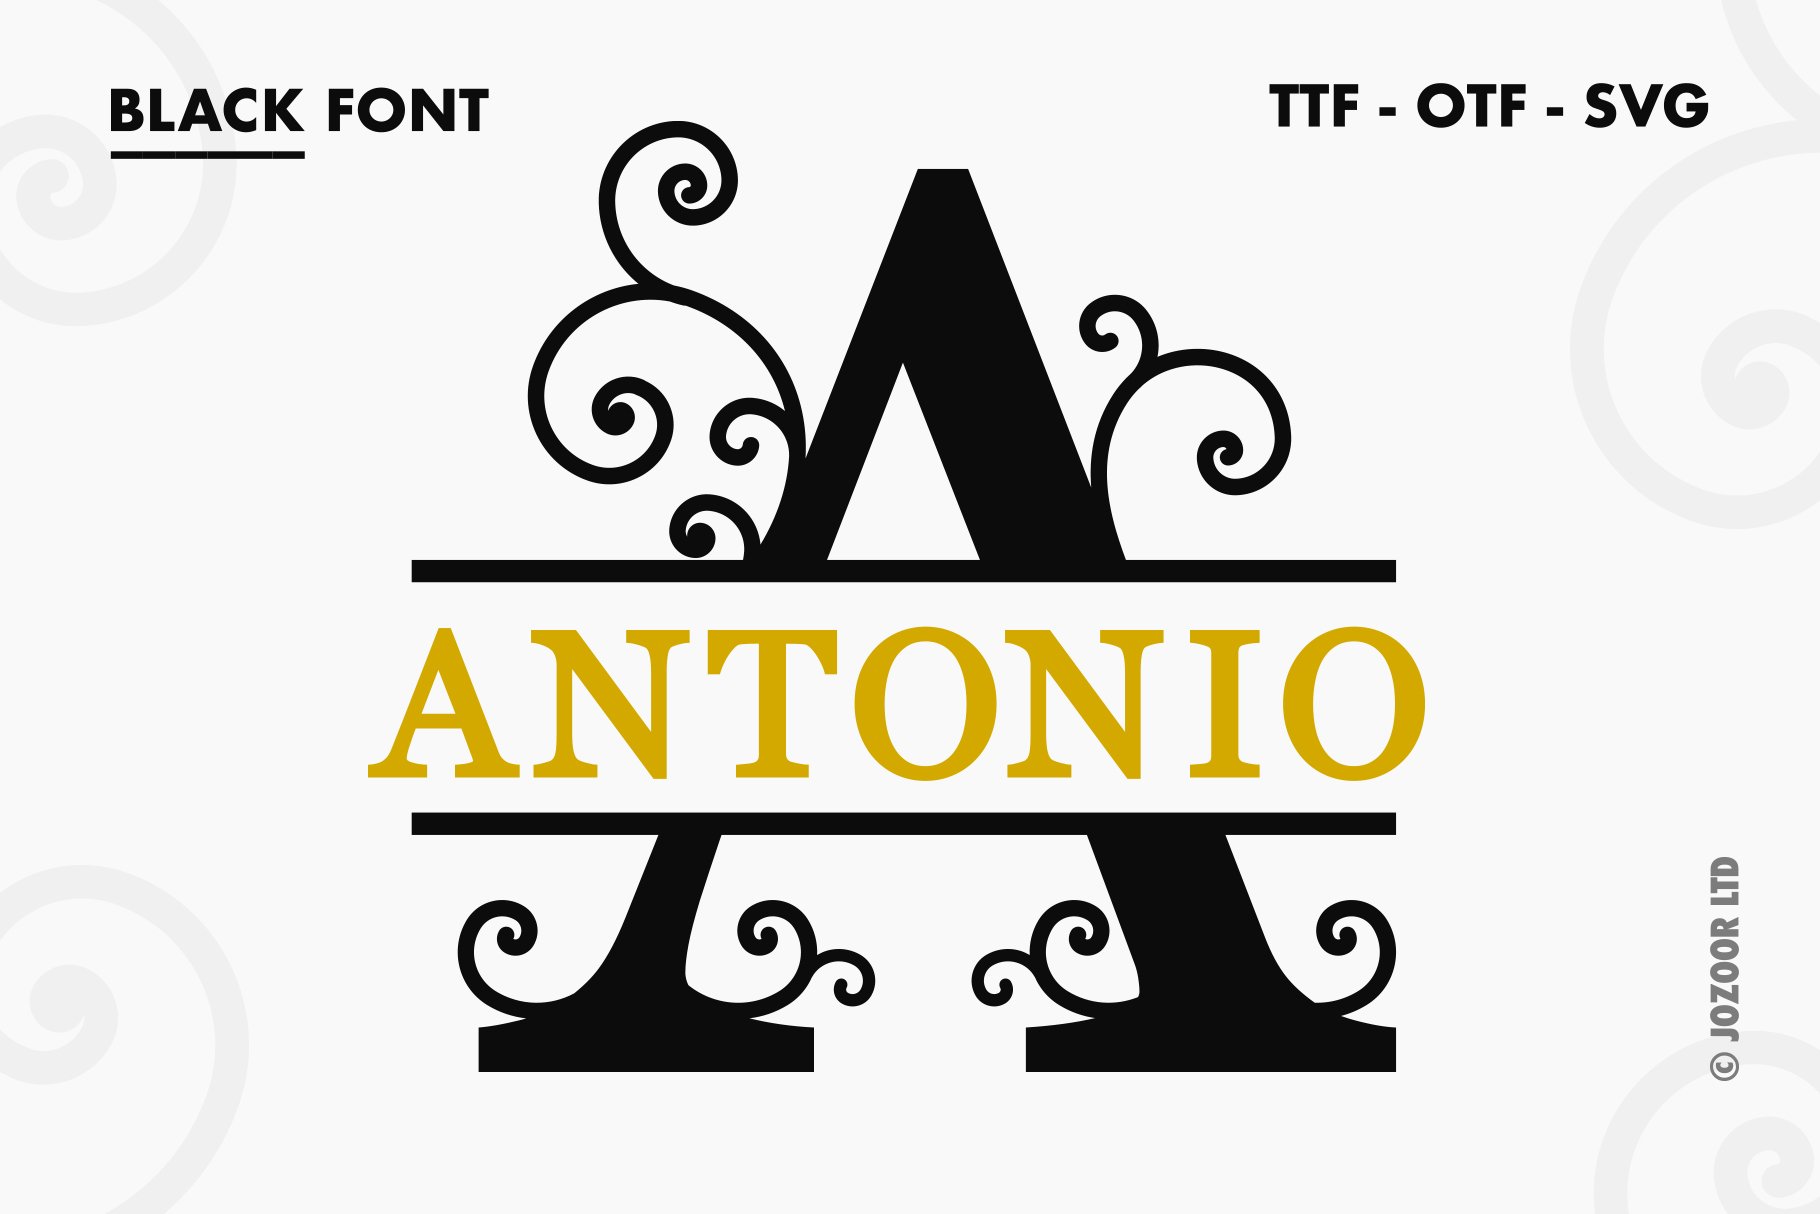 Antonio - Split Monogram Font cover image.